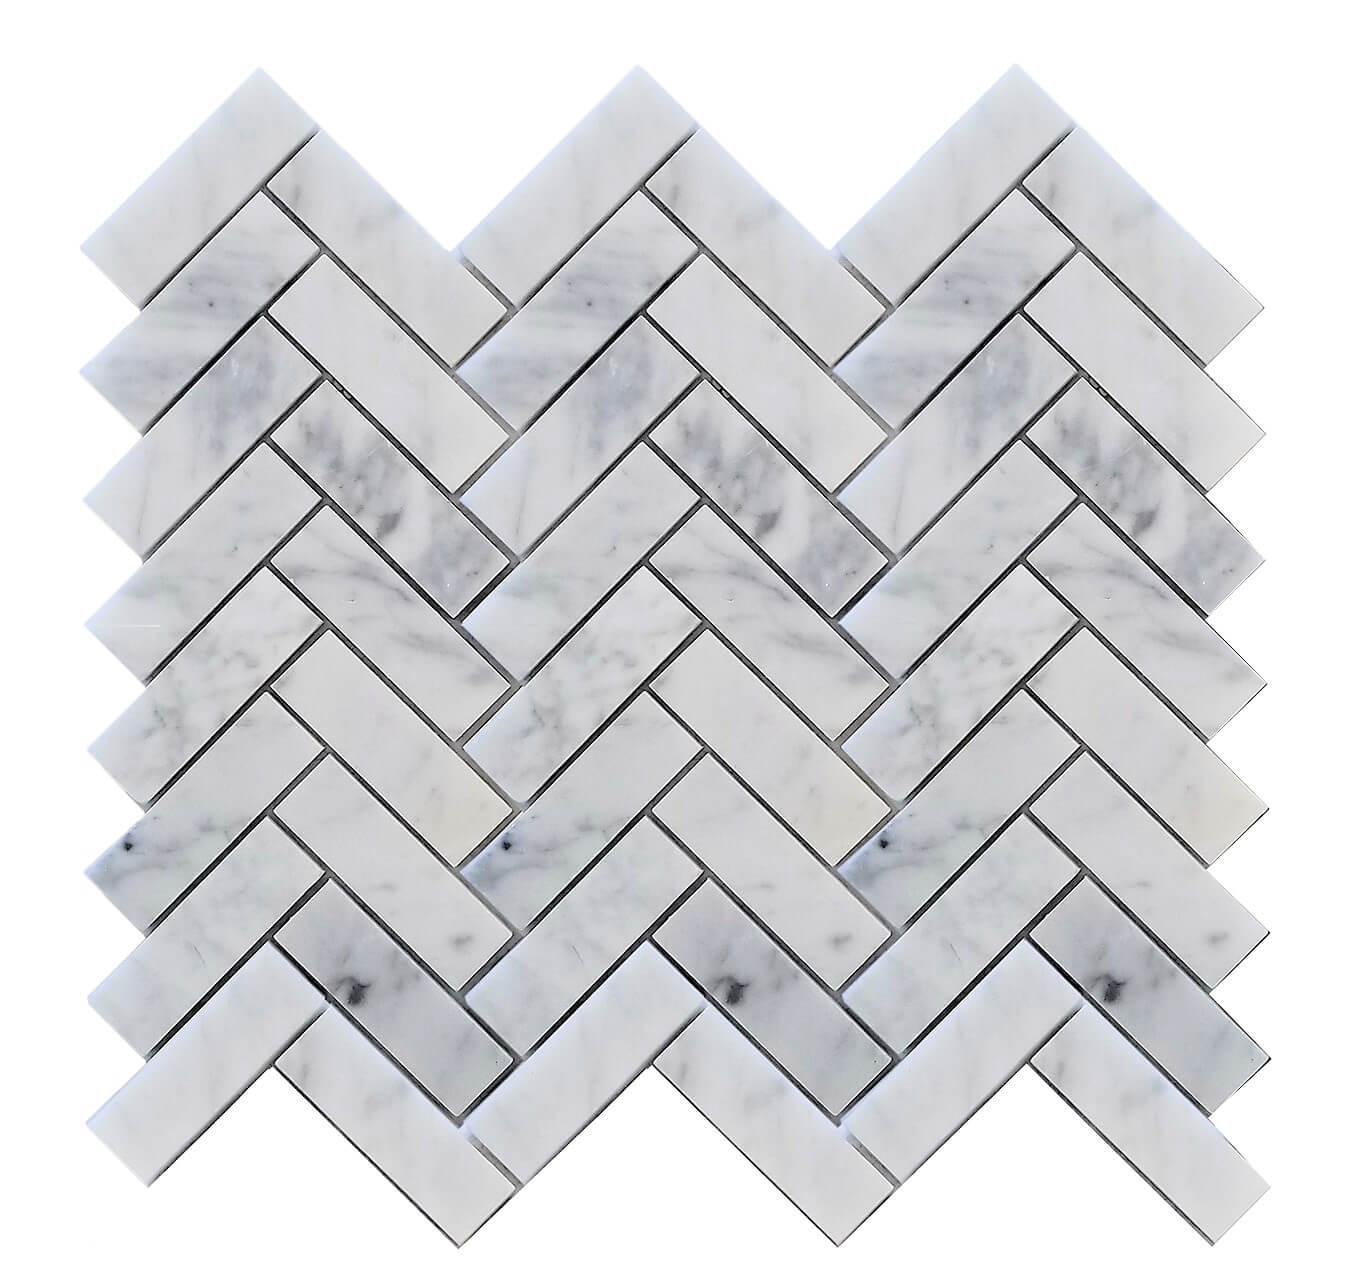 Mosaic tile - 898 | DixieTileShop: Mosaic Tiles, Backsplash Tiles ...